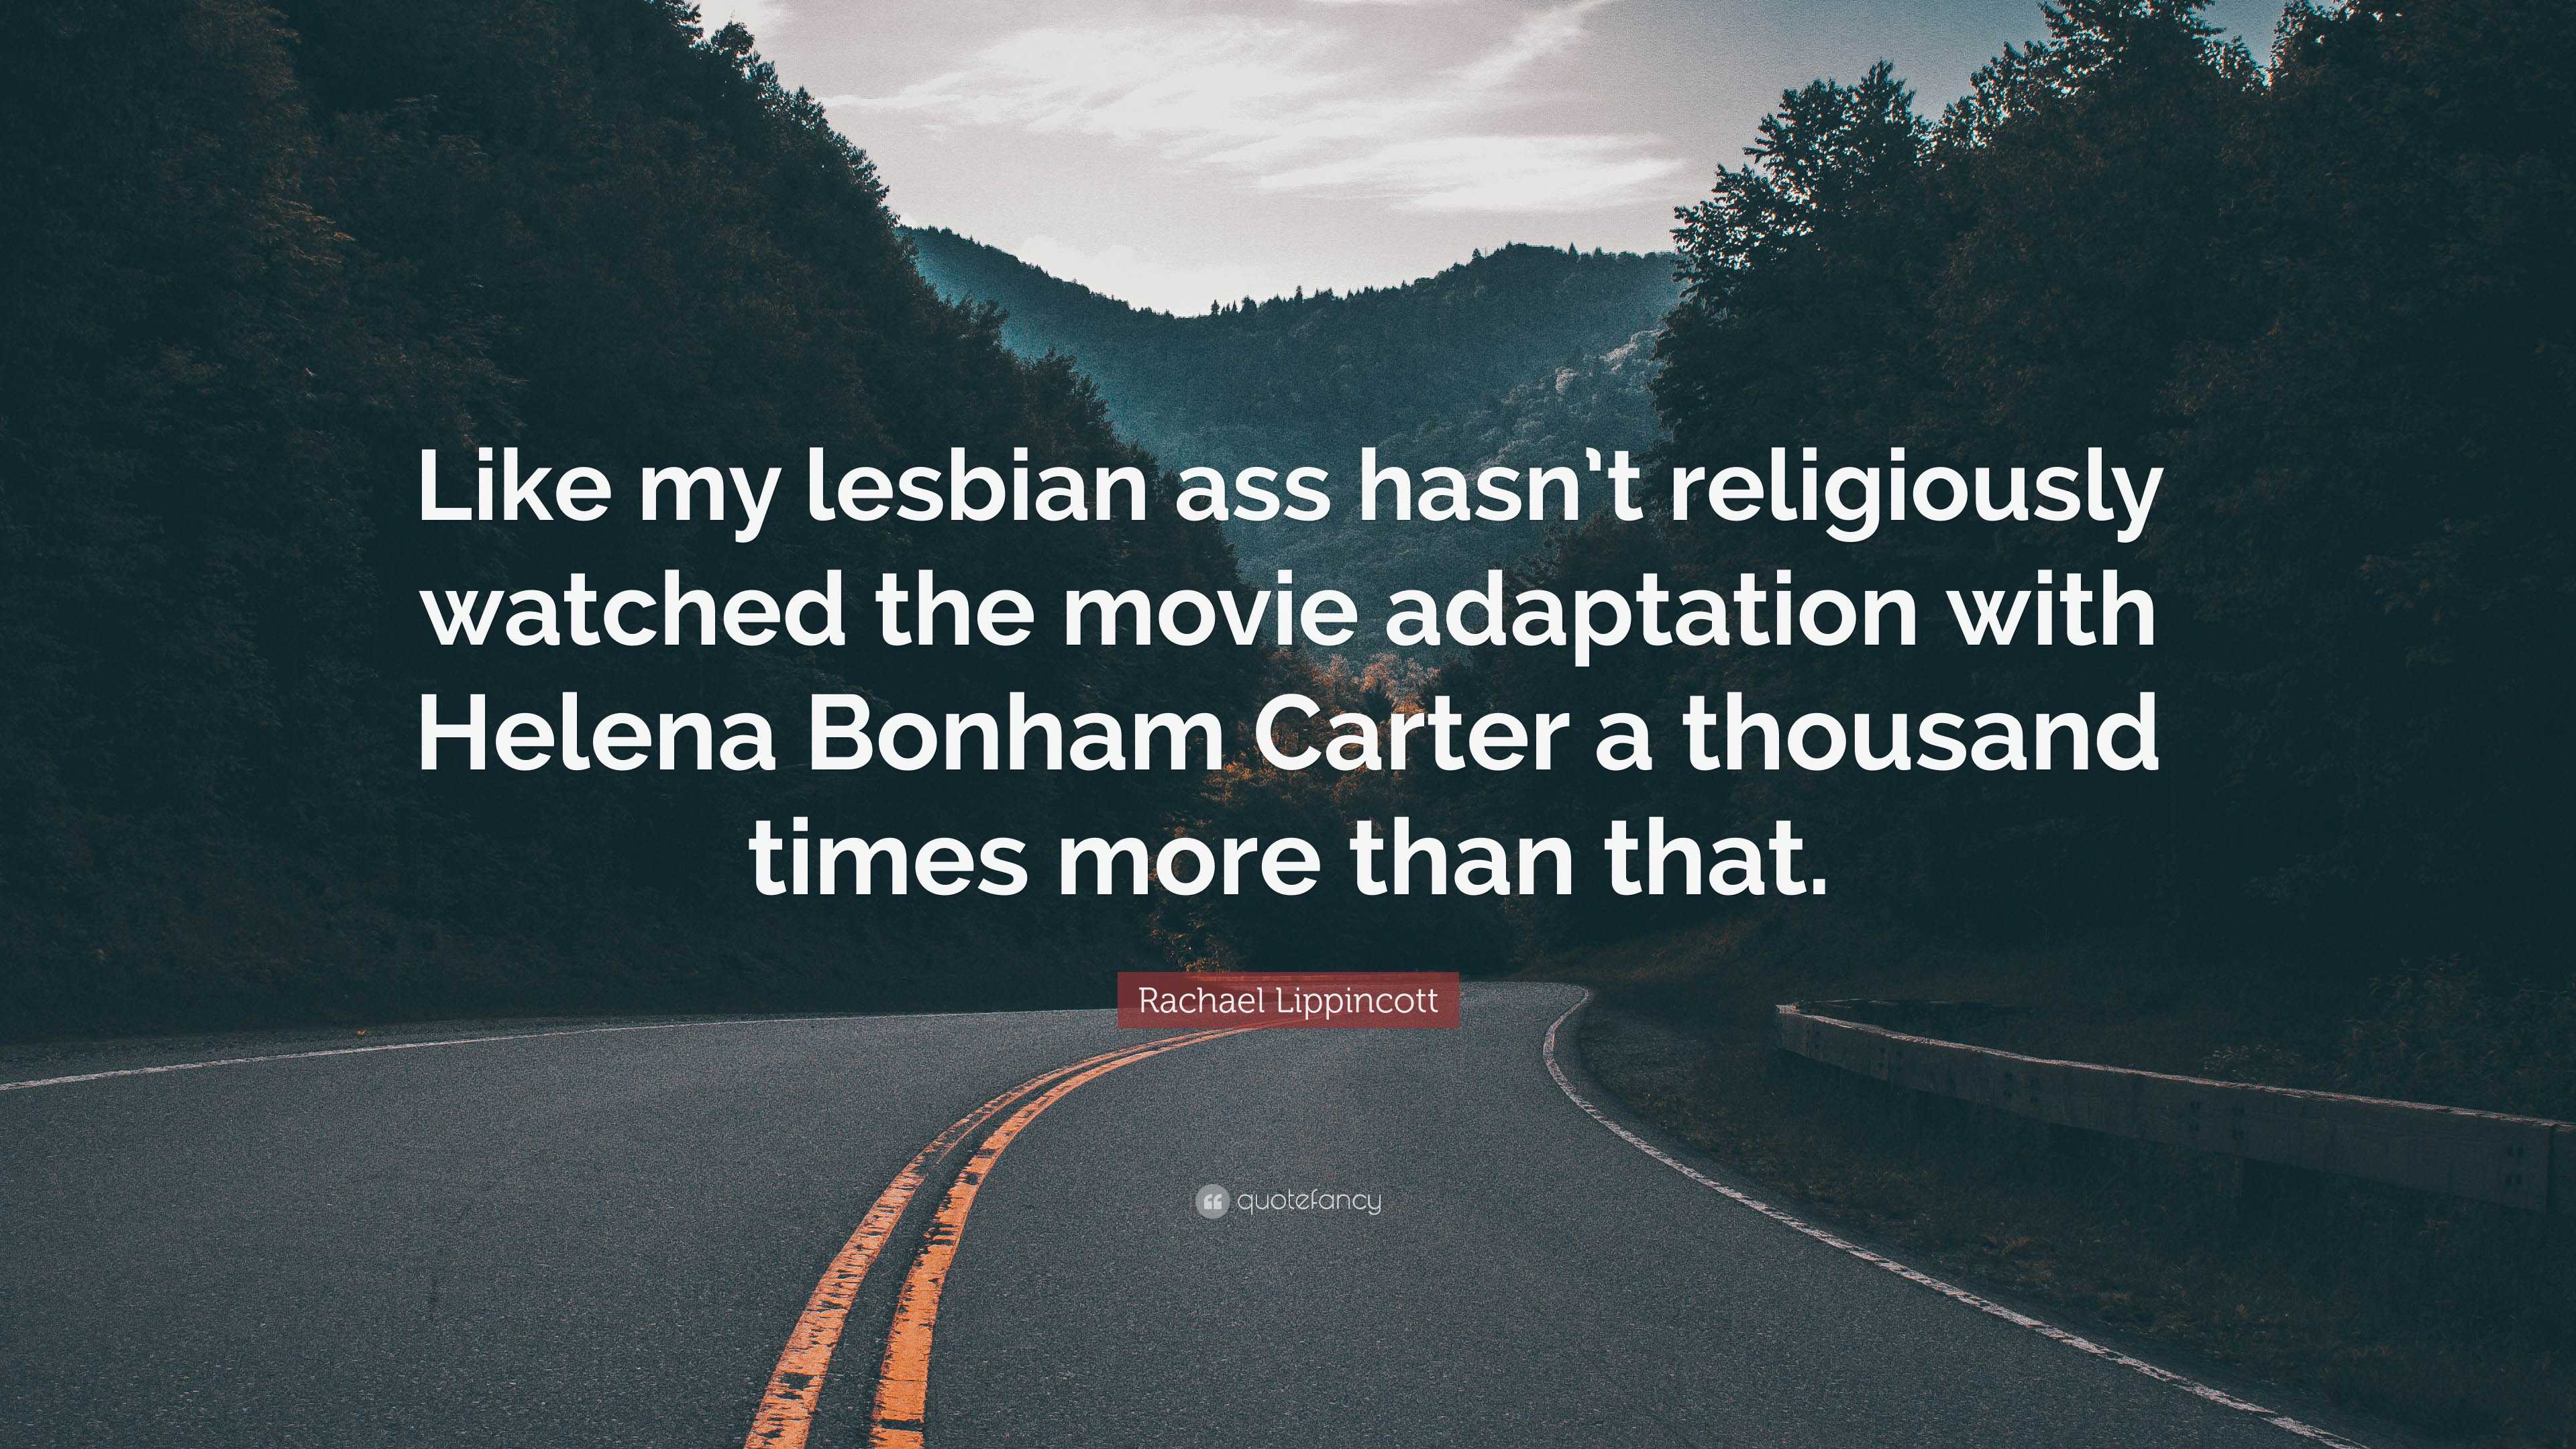 Best of Helena bonham carter lesbian